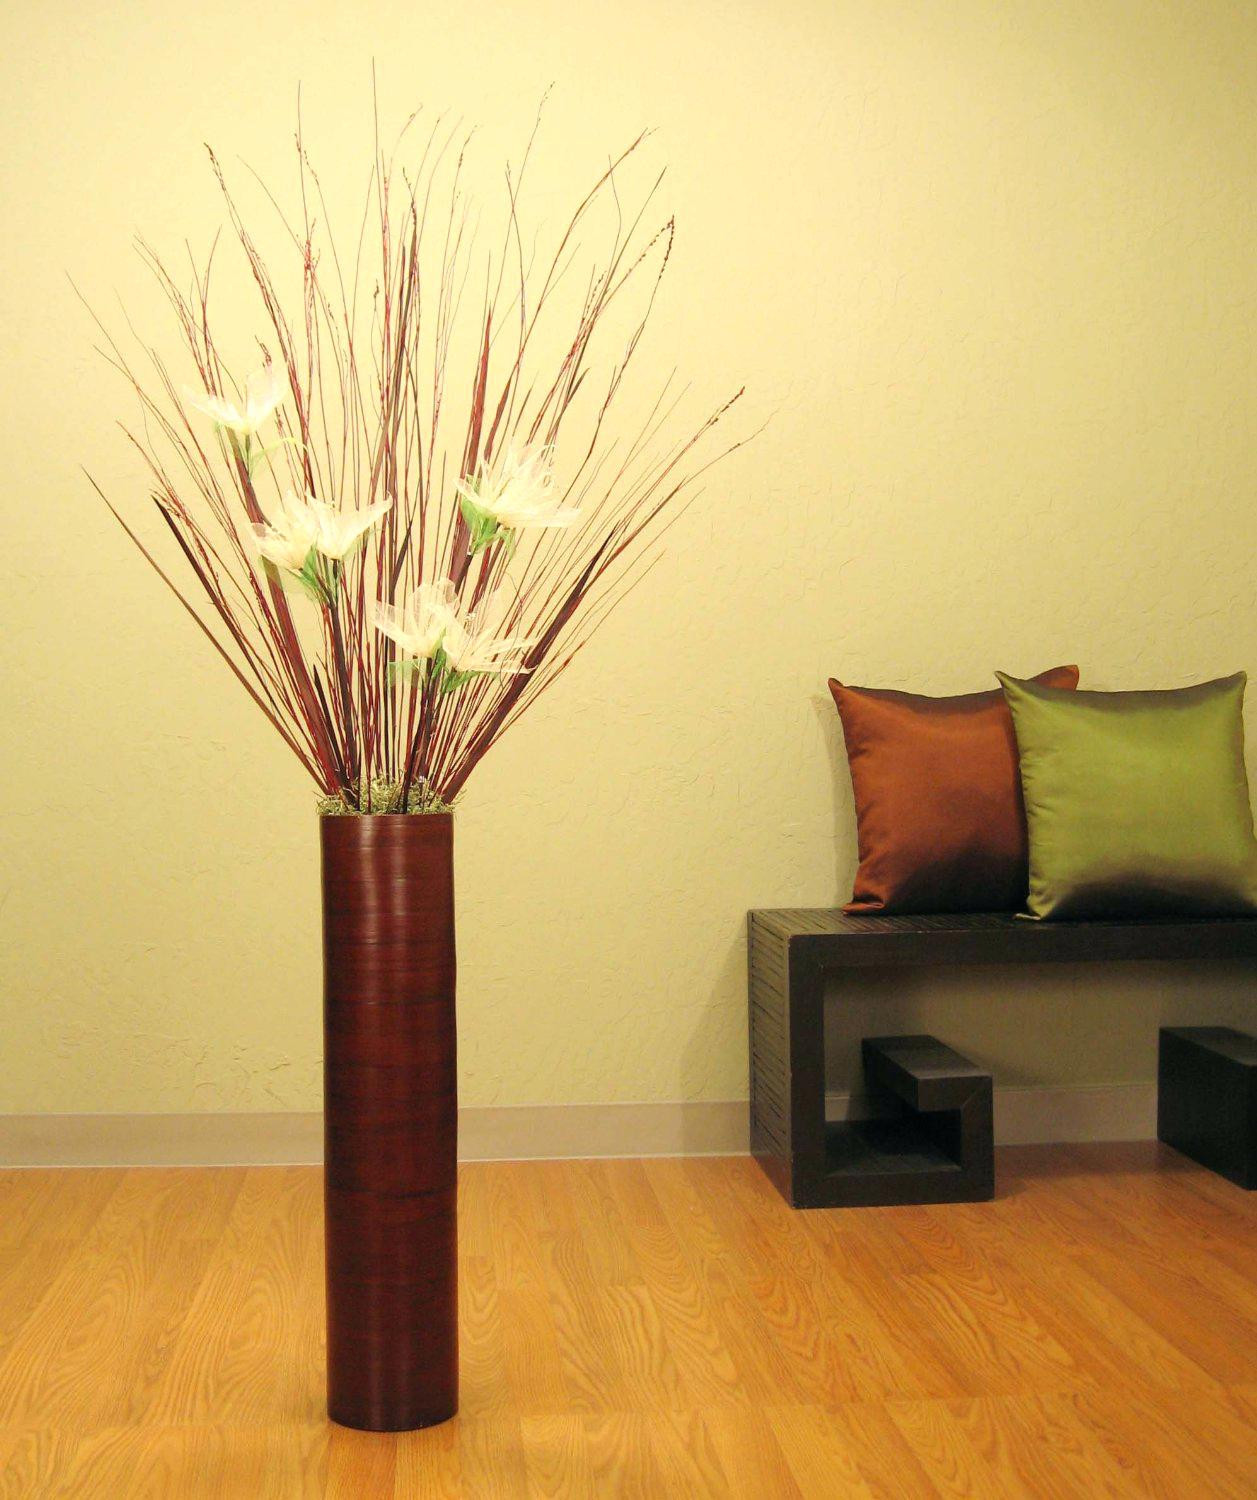 18 Stylish Large Flower Vase Ideas 2024 free download large flower vase ideas of large floor vase decor vases with bamboo sticks kcscienceinc org intended for large floor vase decor vases with bamboo sticks